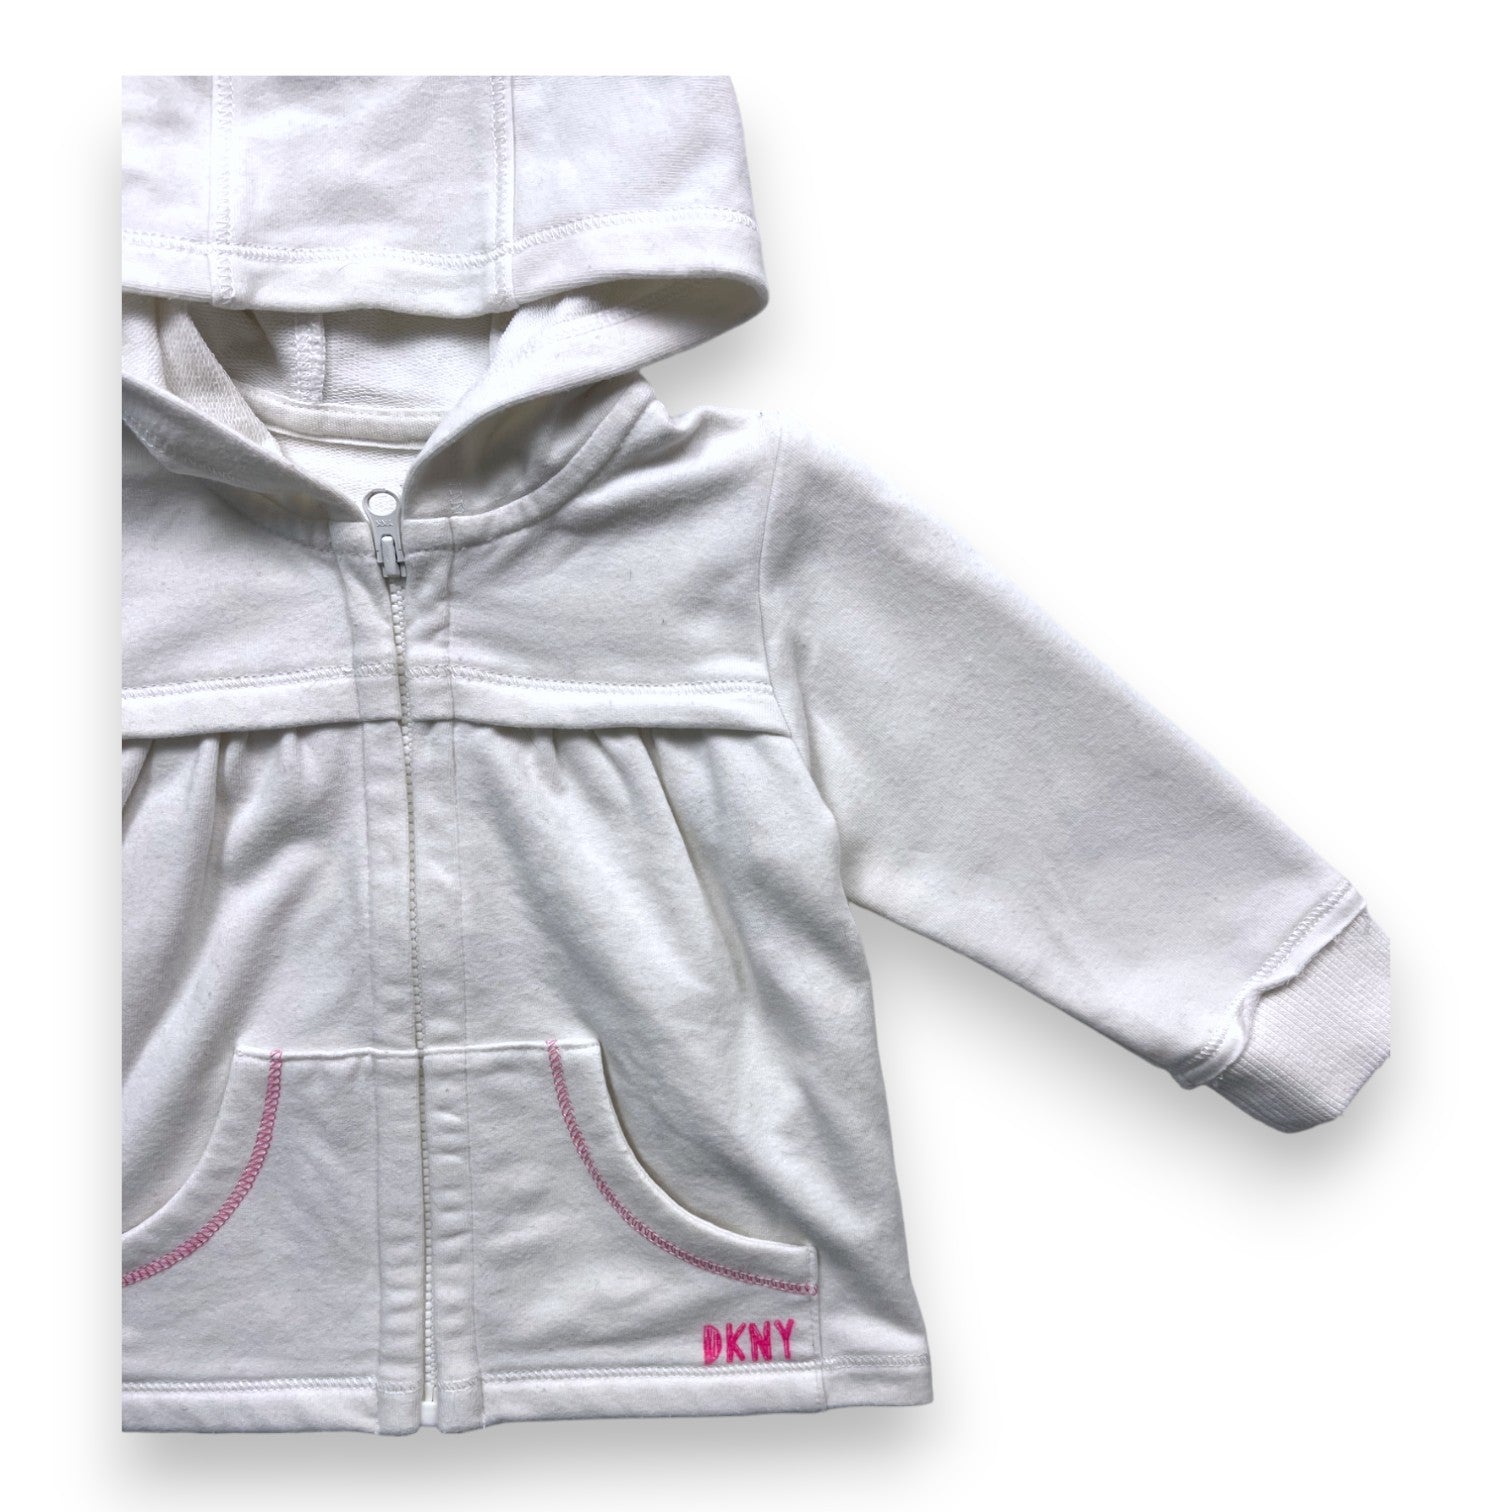 DKNY - Sweat à capuche blanc - 6 mois